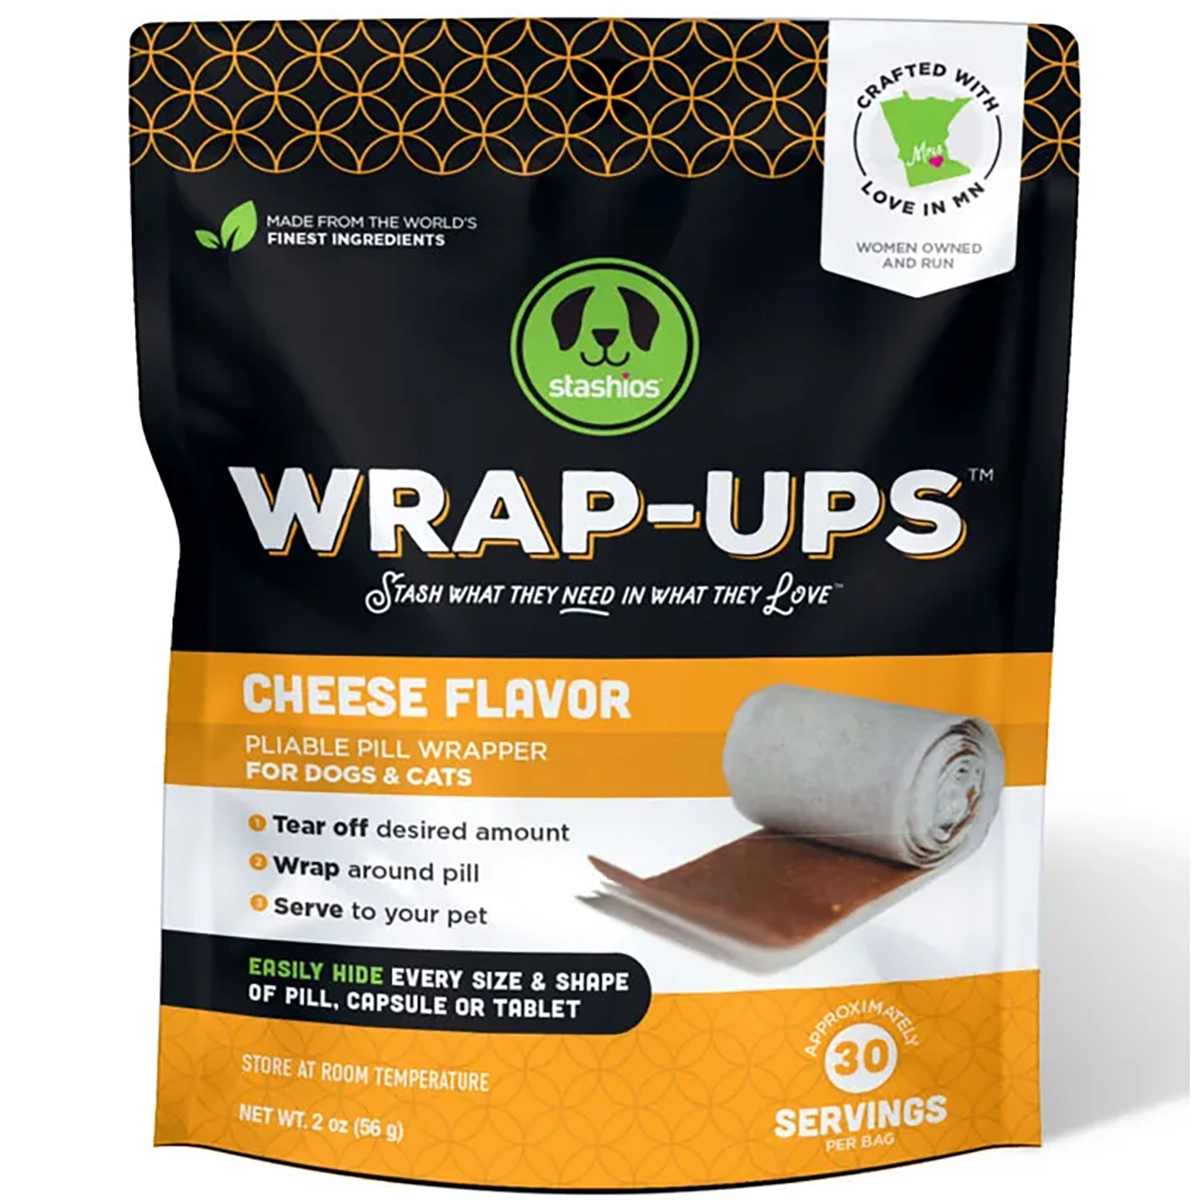 Stashios Wrap-Ups Cheese Flavor Dog & Cat Treats